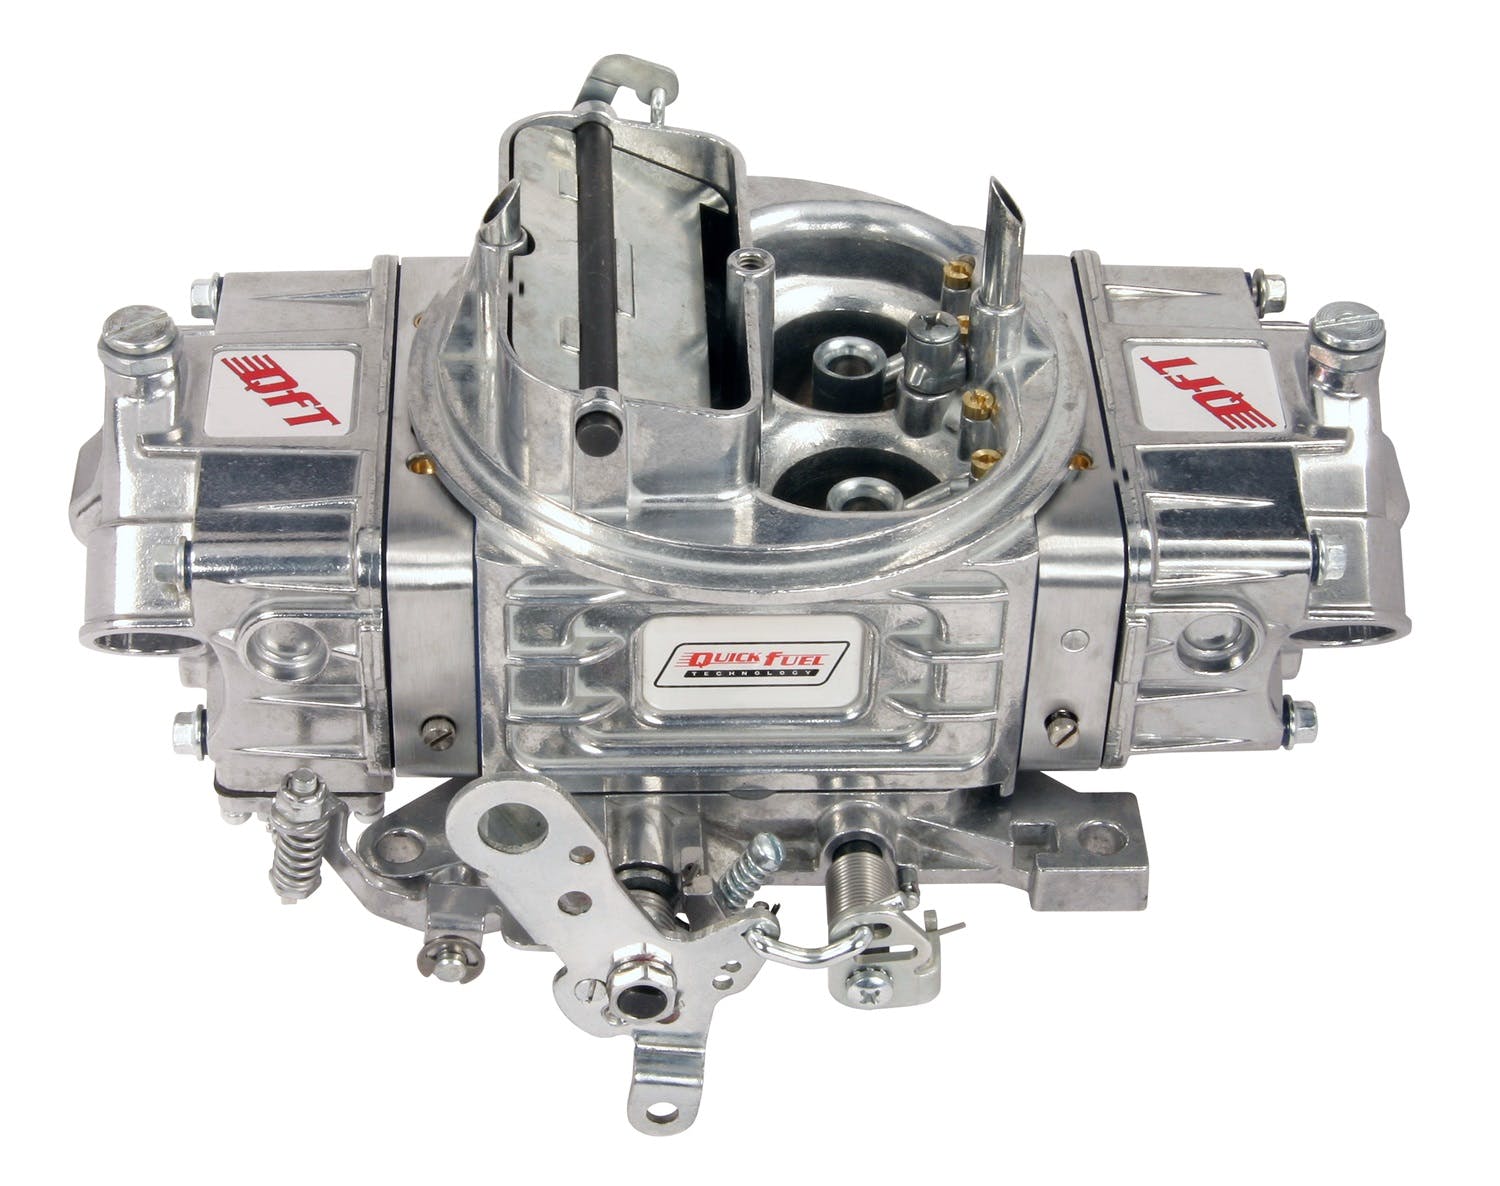 Quick Fuel Technology HR-650 Hot Rod Carburetor 650 CFM MS